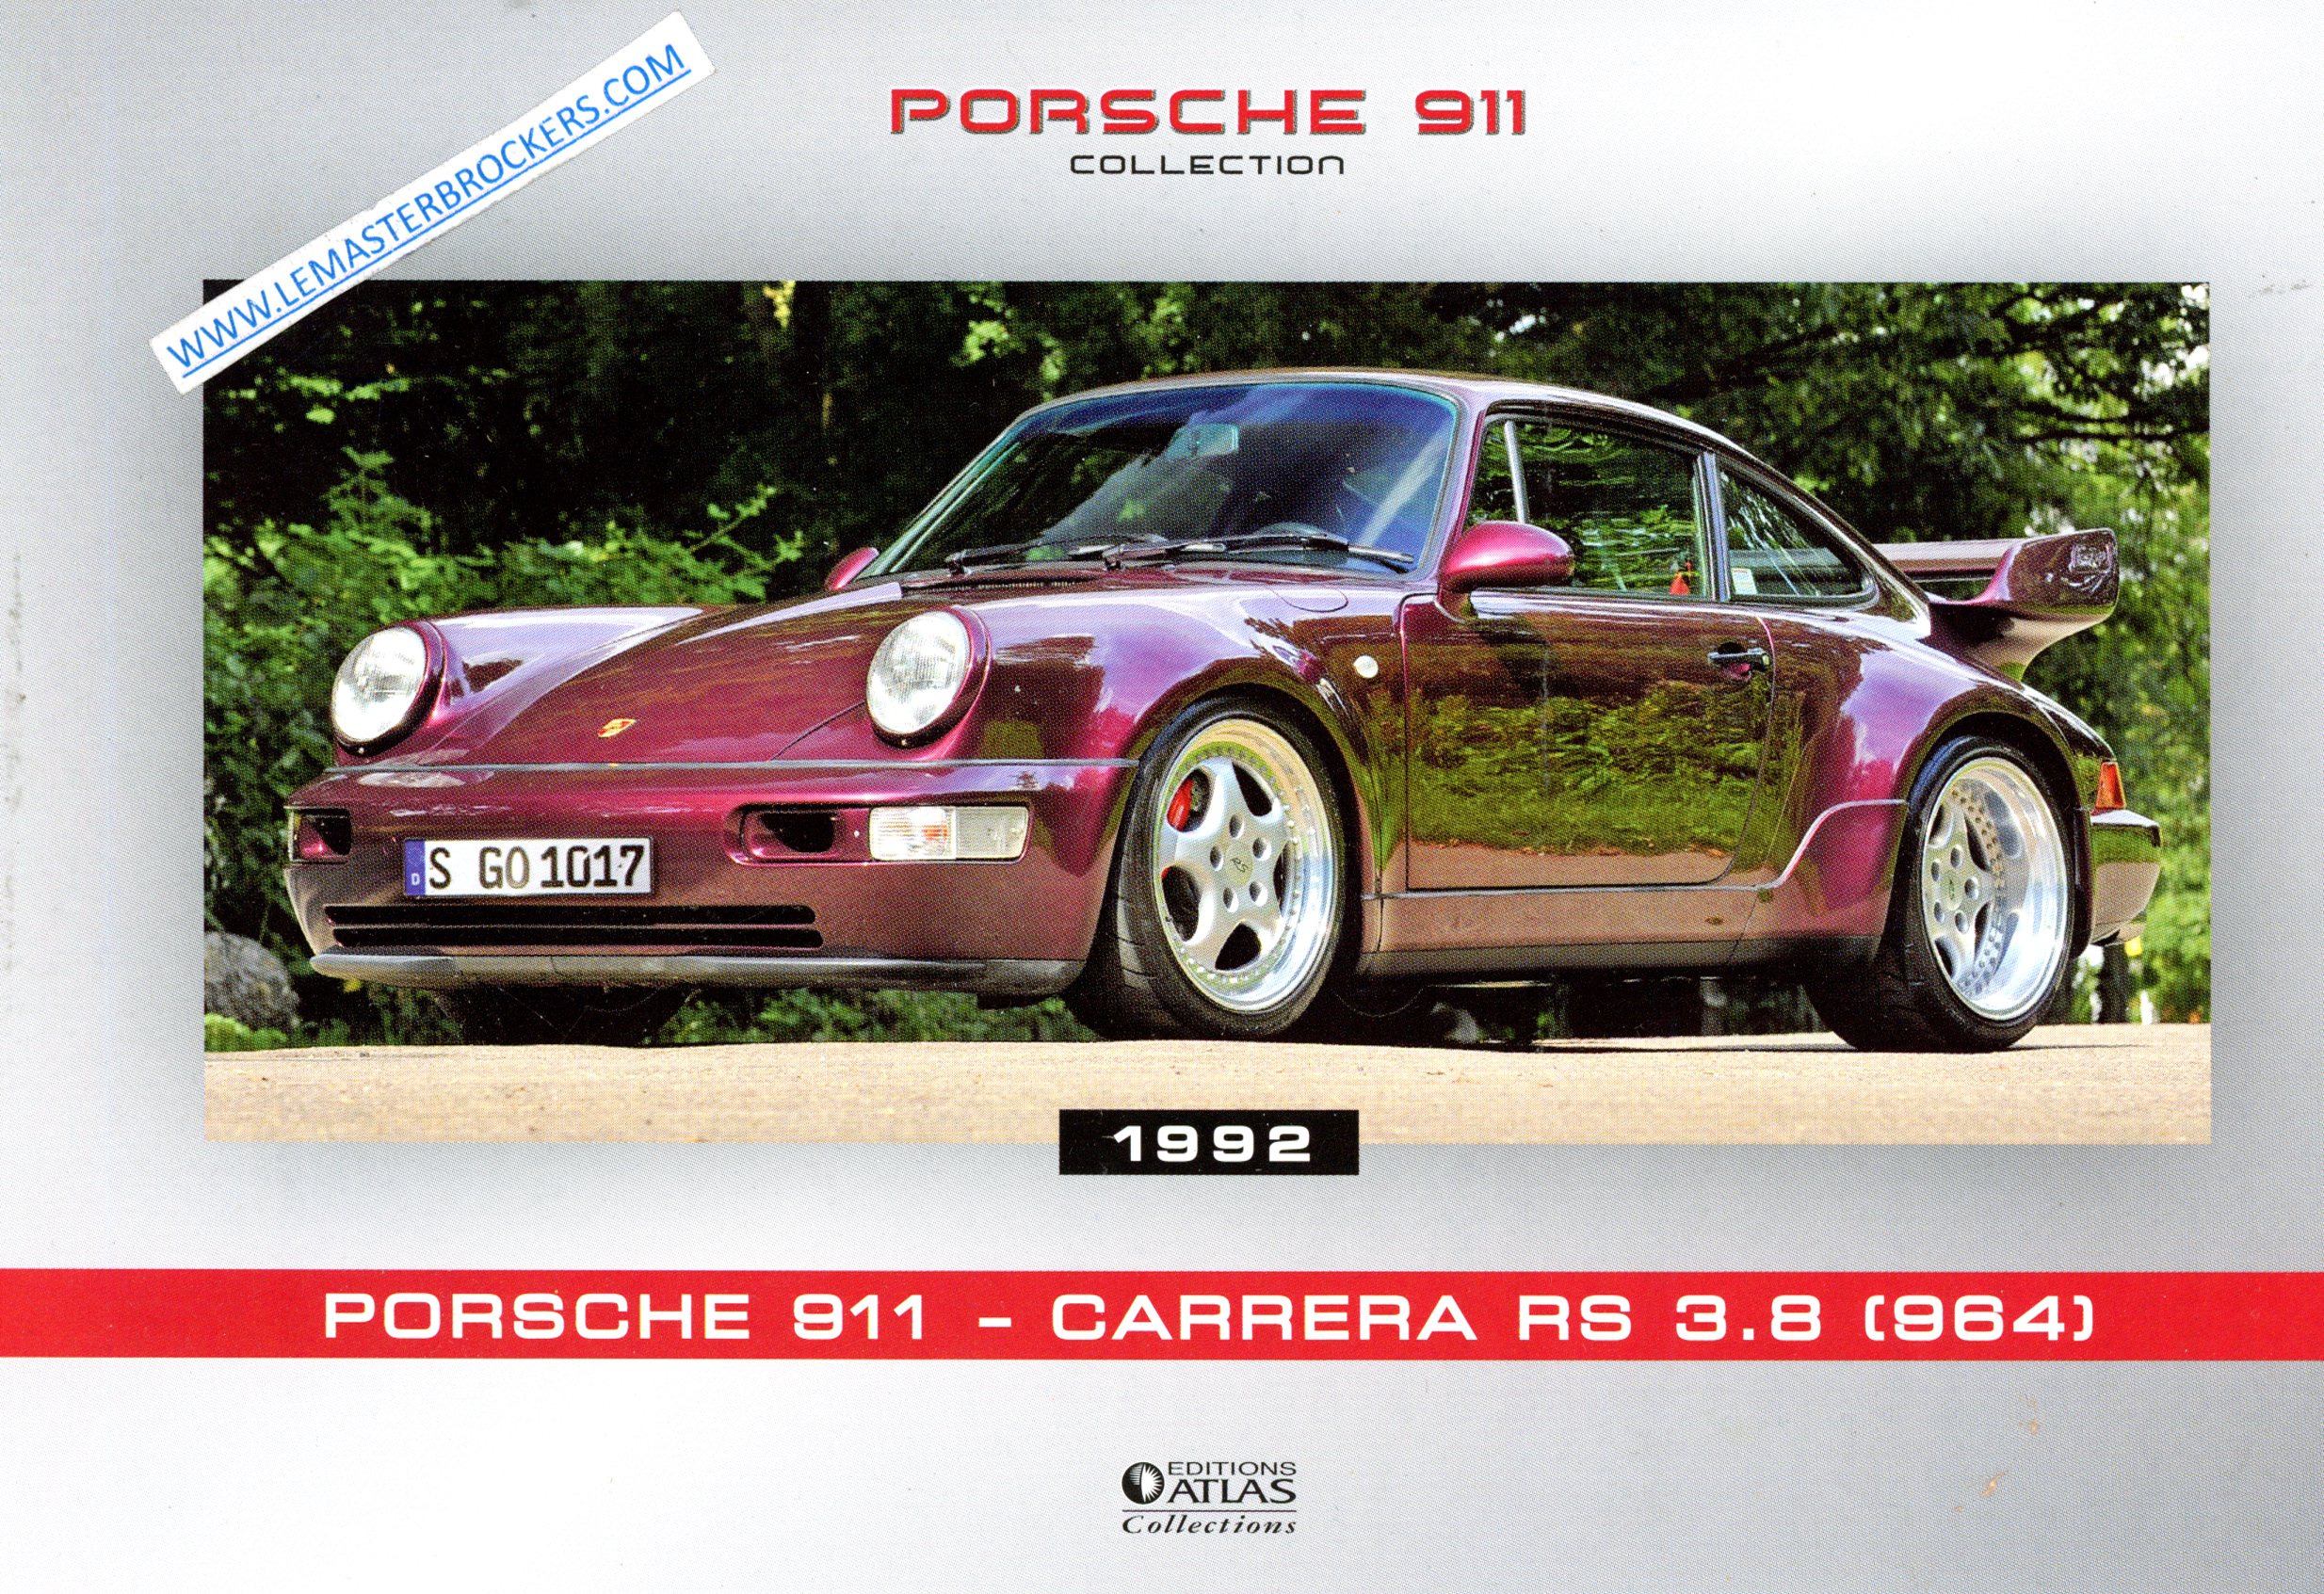 PORSCHE 911 CARRERA RS 3.8 964 1992